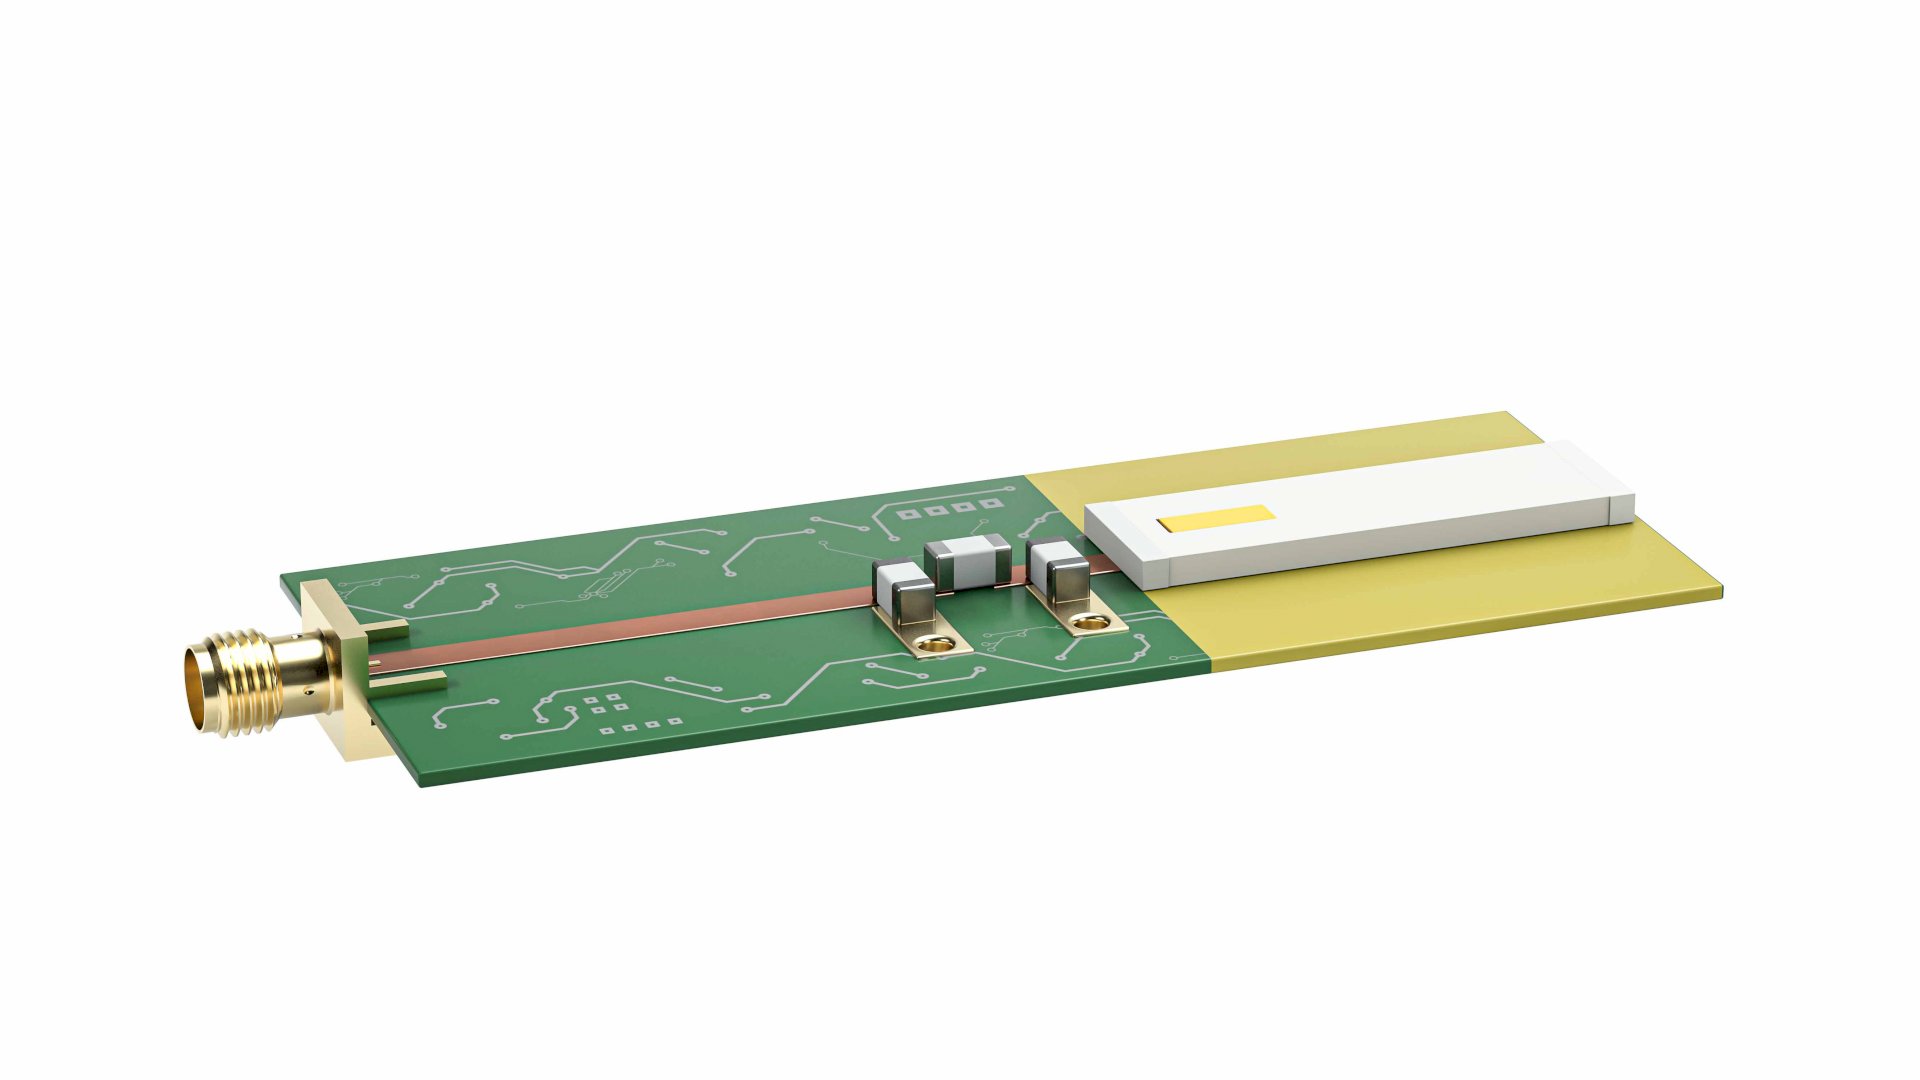 Würth Elektronik offers matching service for its WE-MCA chip antennas